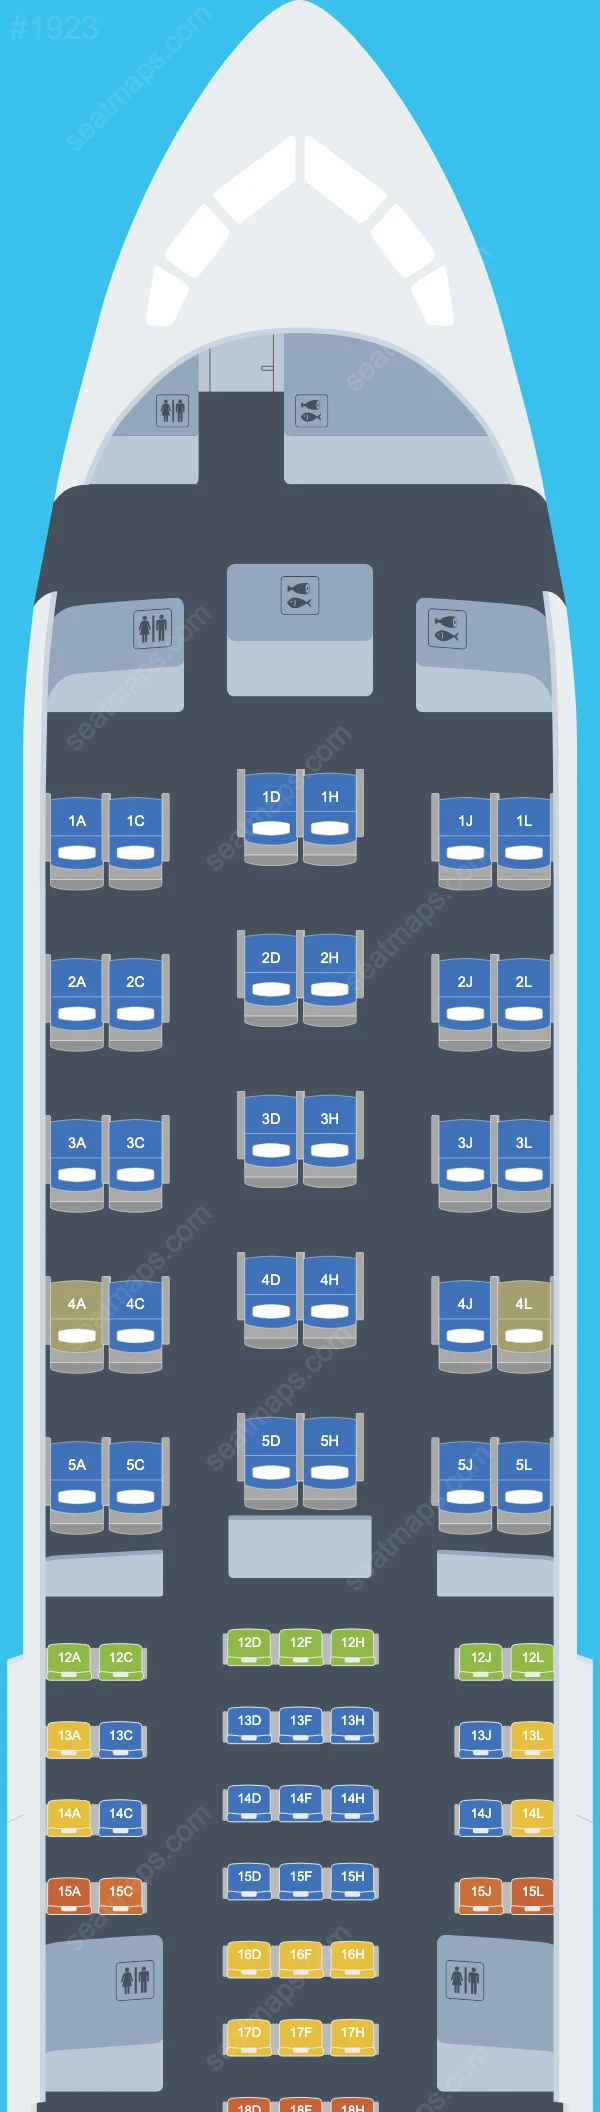 LATAM Airlines Boeing 767 Seat Maps 767-300 ER V.1